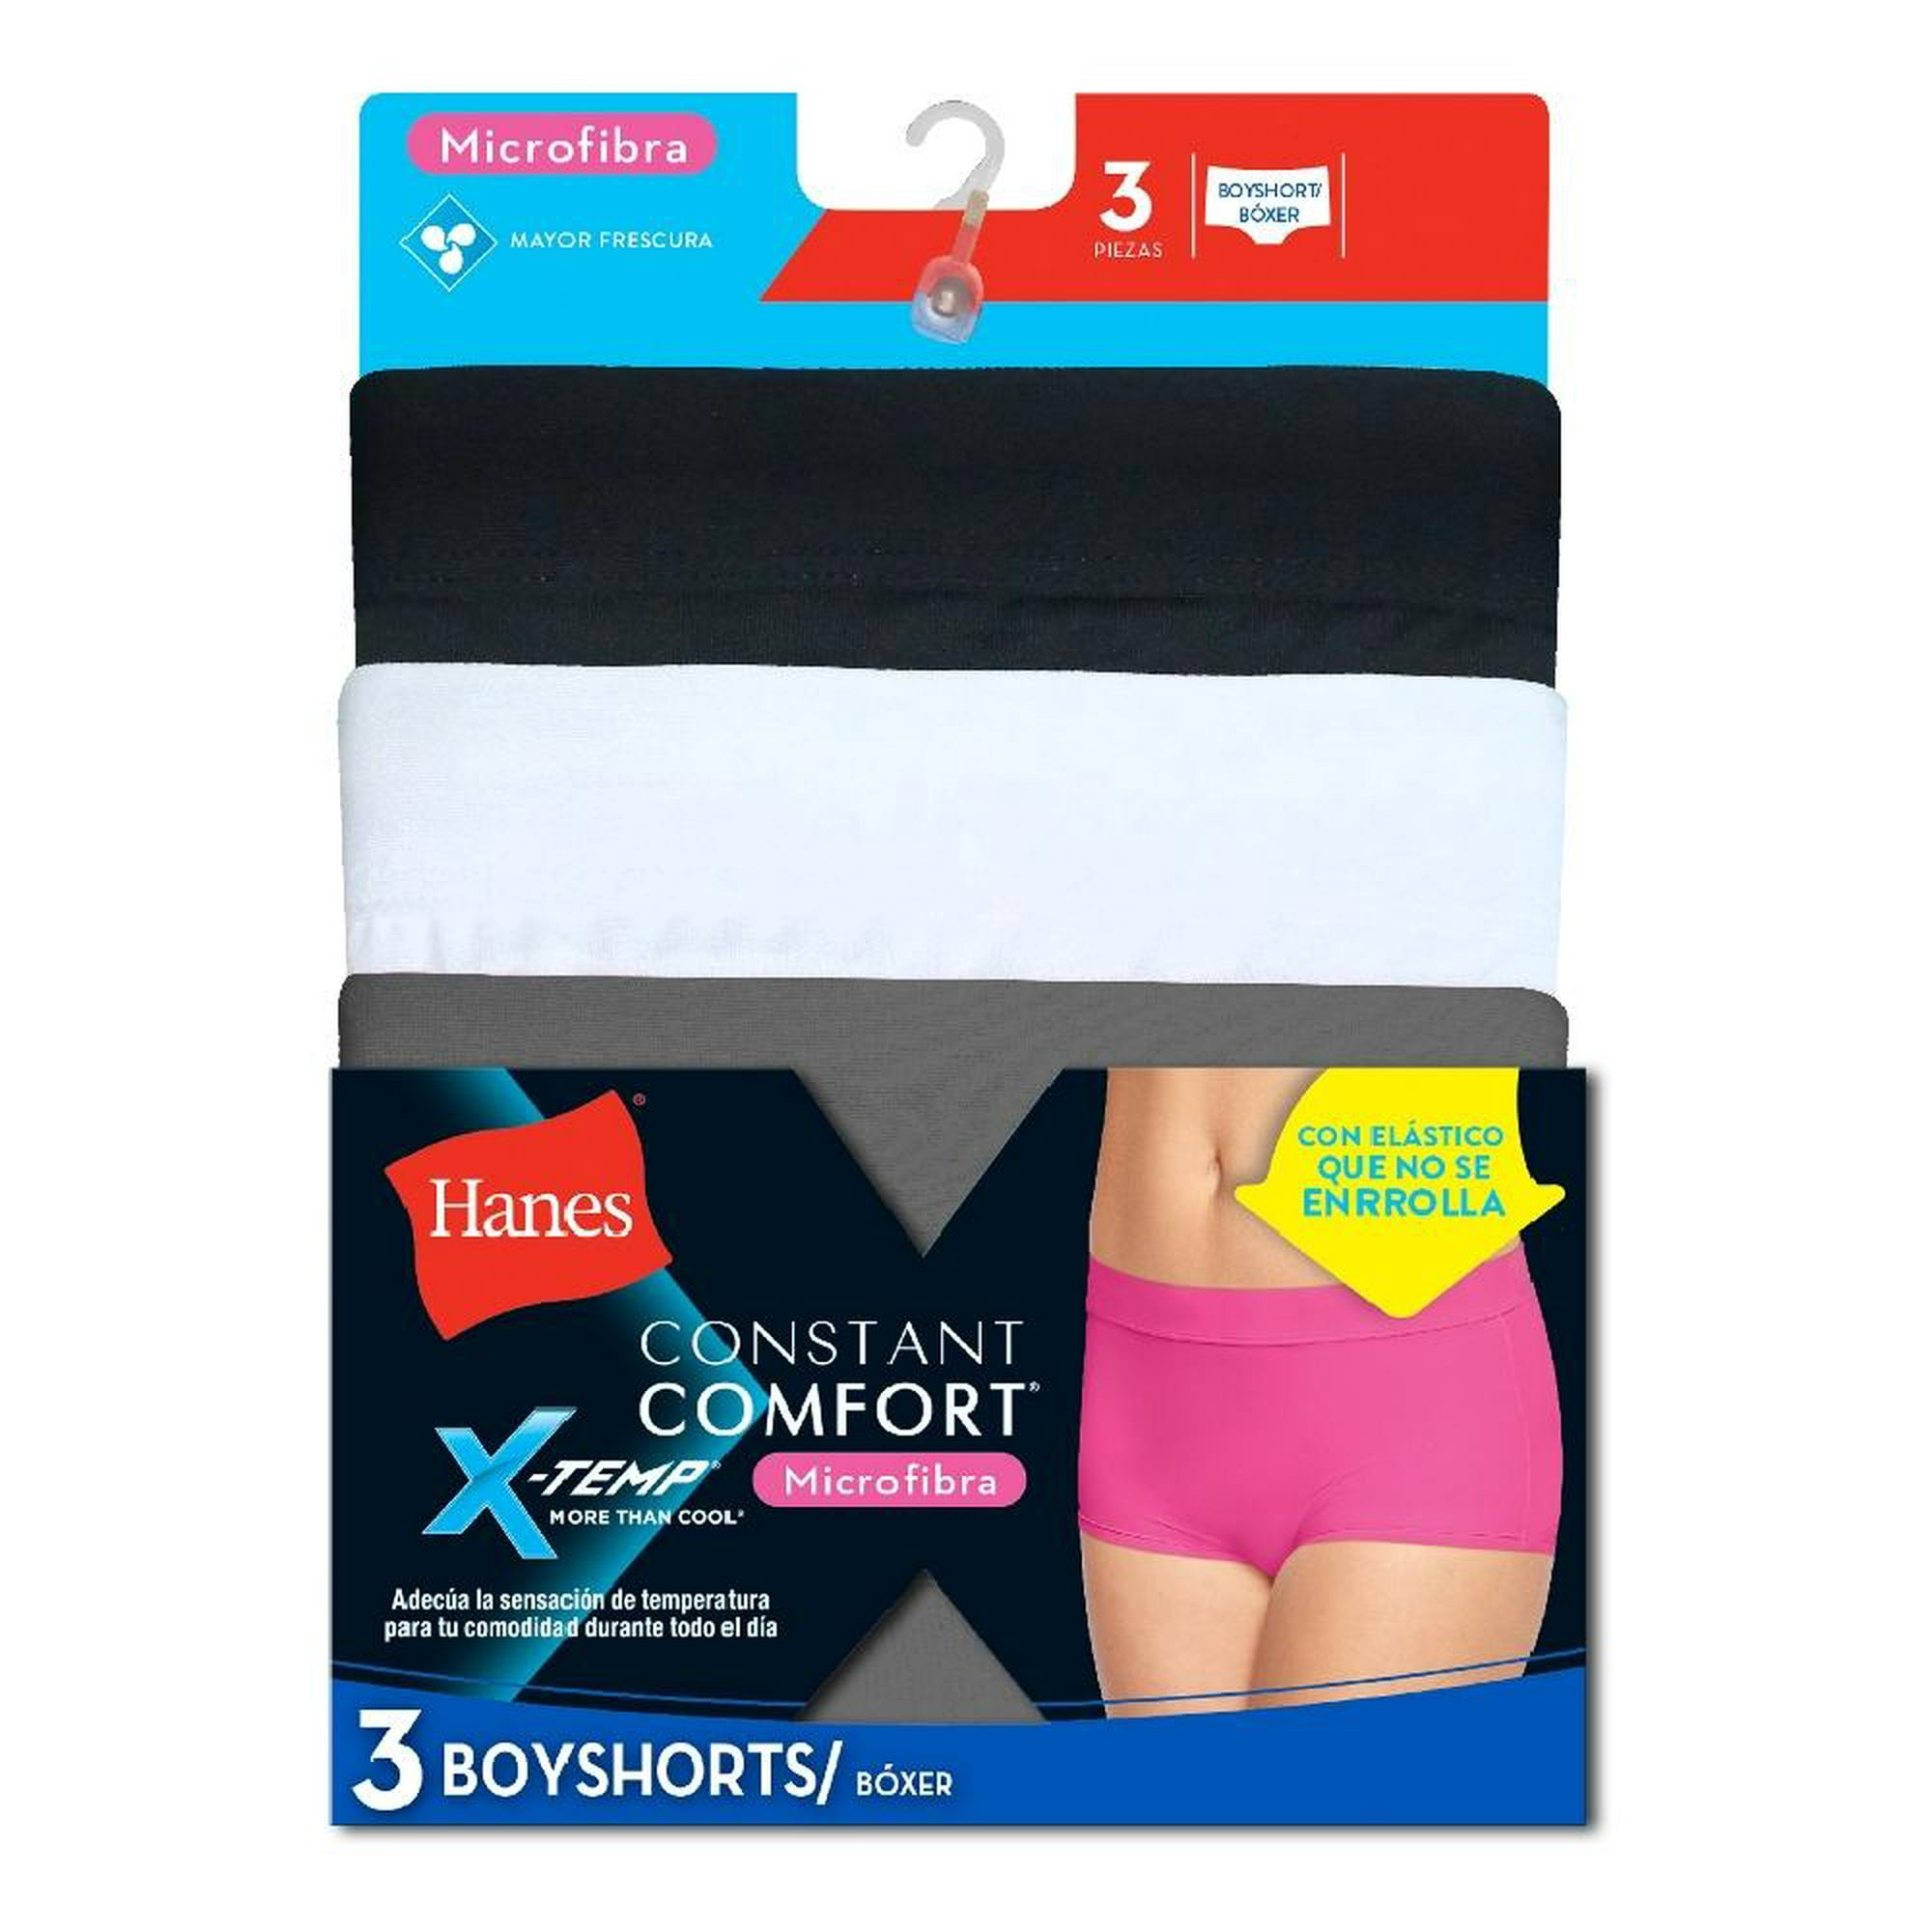 Hanes Women's Constant Comfort X-Temp Modern Brief Panty, Assorted